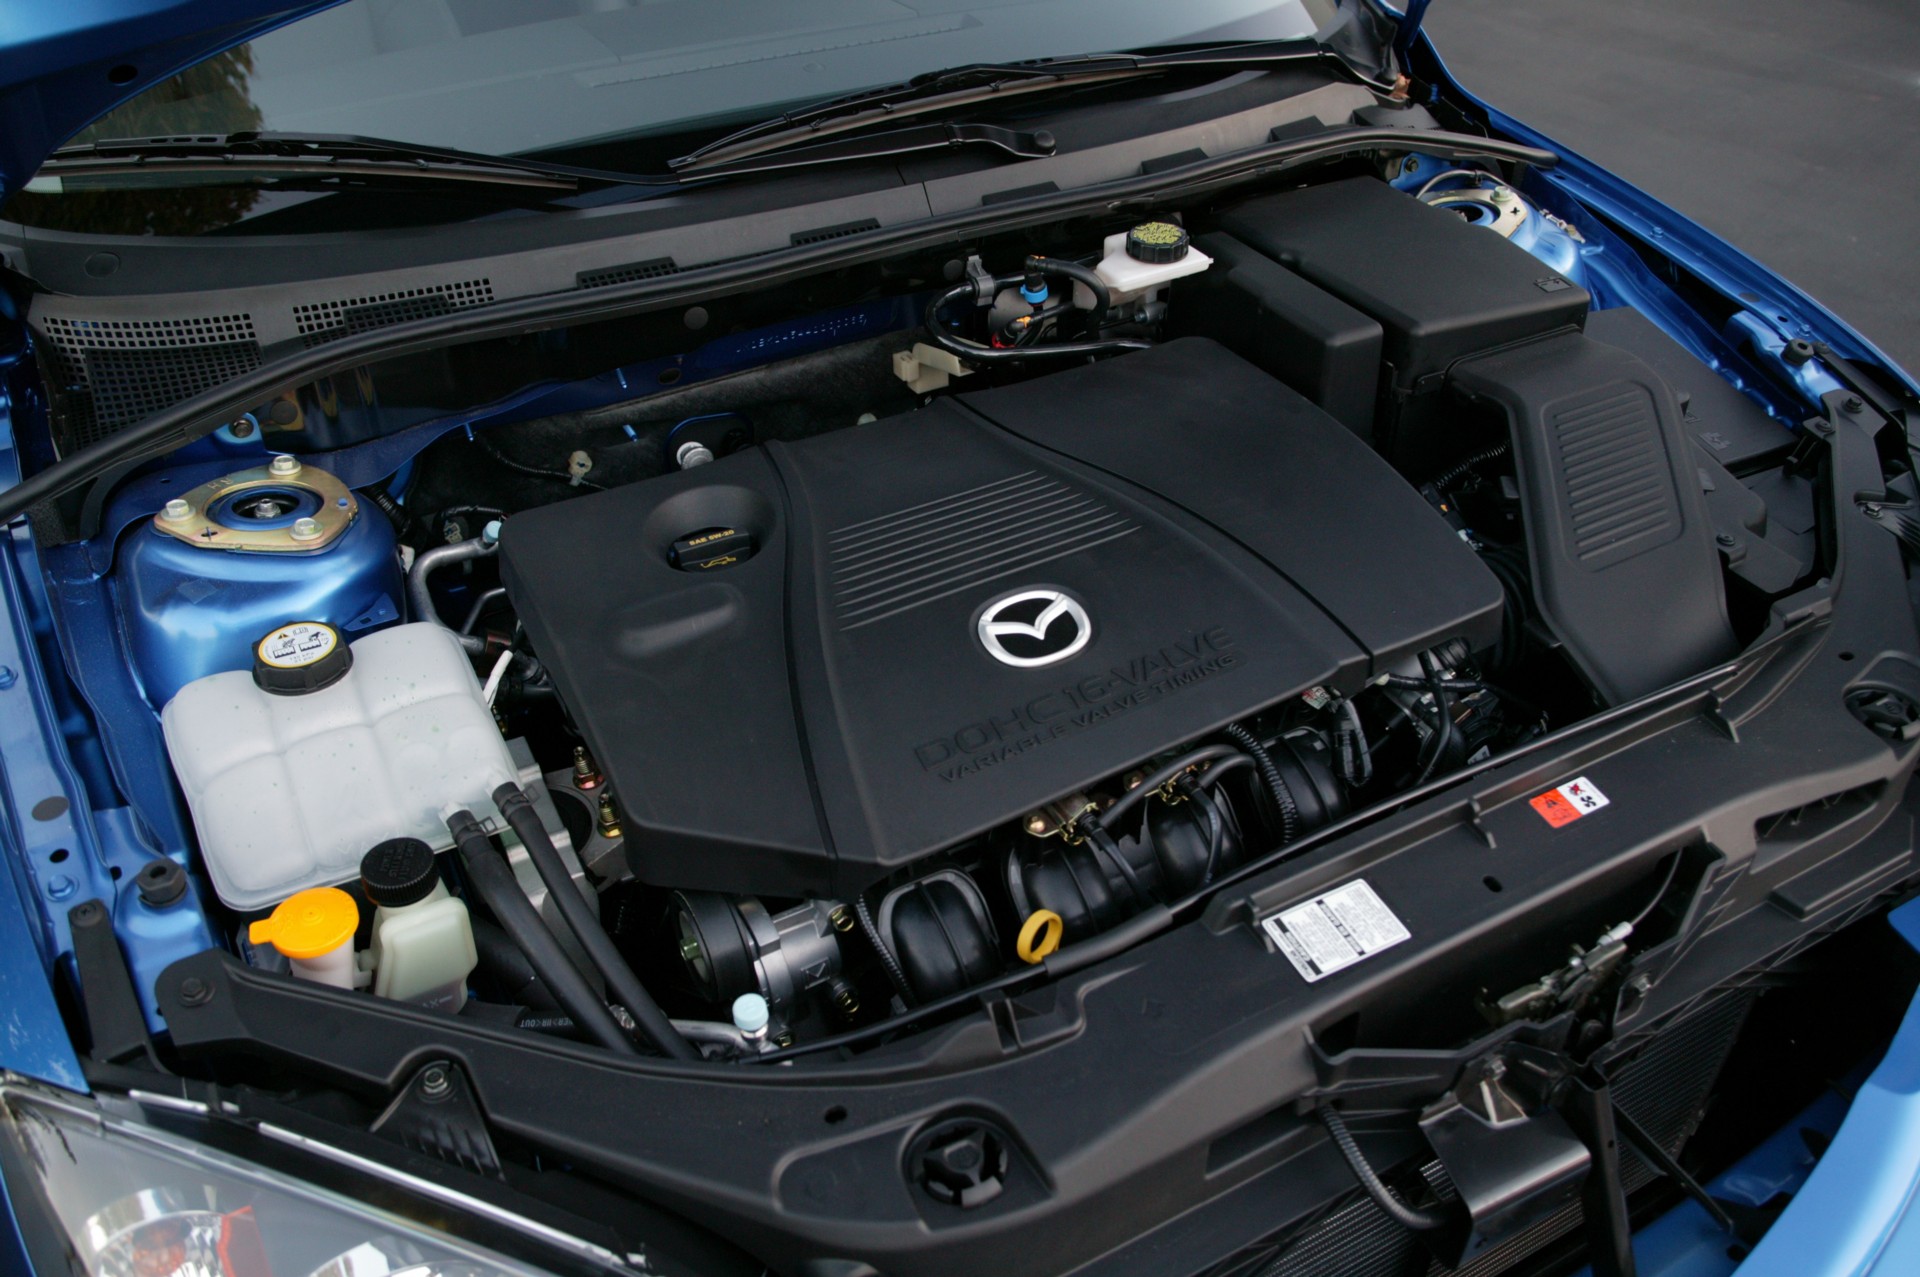 Двигатель двигатель 1 3 литра. Mazda 3 2.3 Motor. Мазда 3 2005 мотор. Мазда 3 2008 под капотом. Mazda 3 двигатель 2.3.